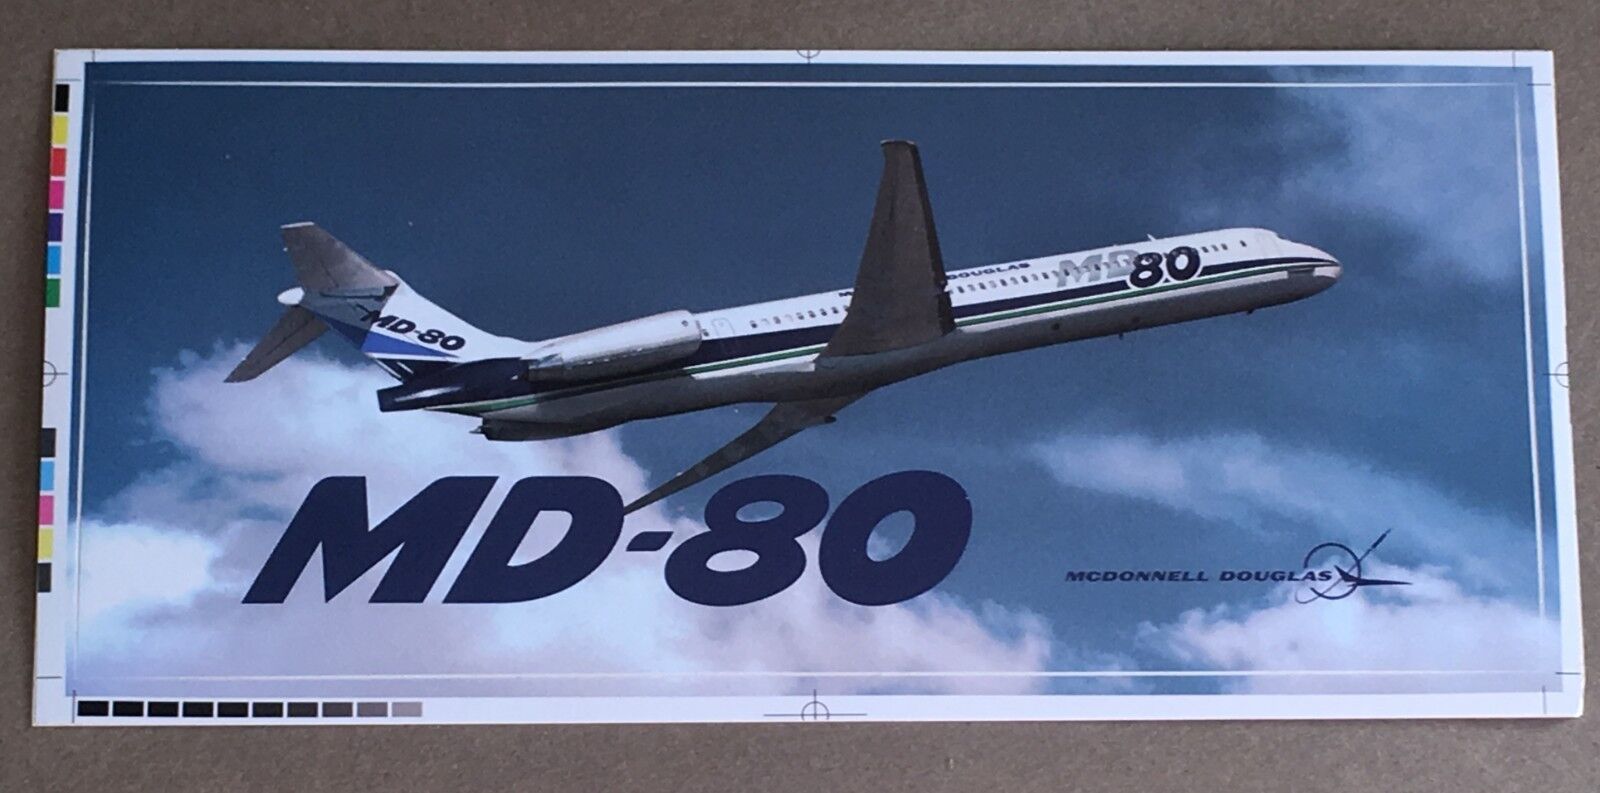 MINT Vintage McDonnell Douglas MD-80 aircraft bumper sticker / decal